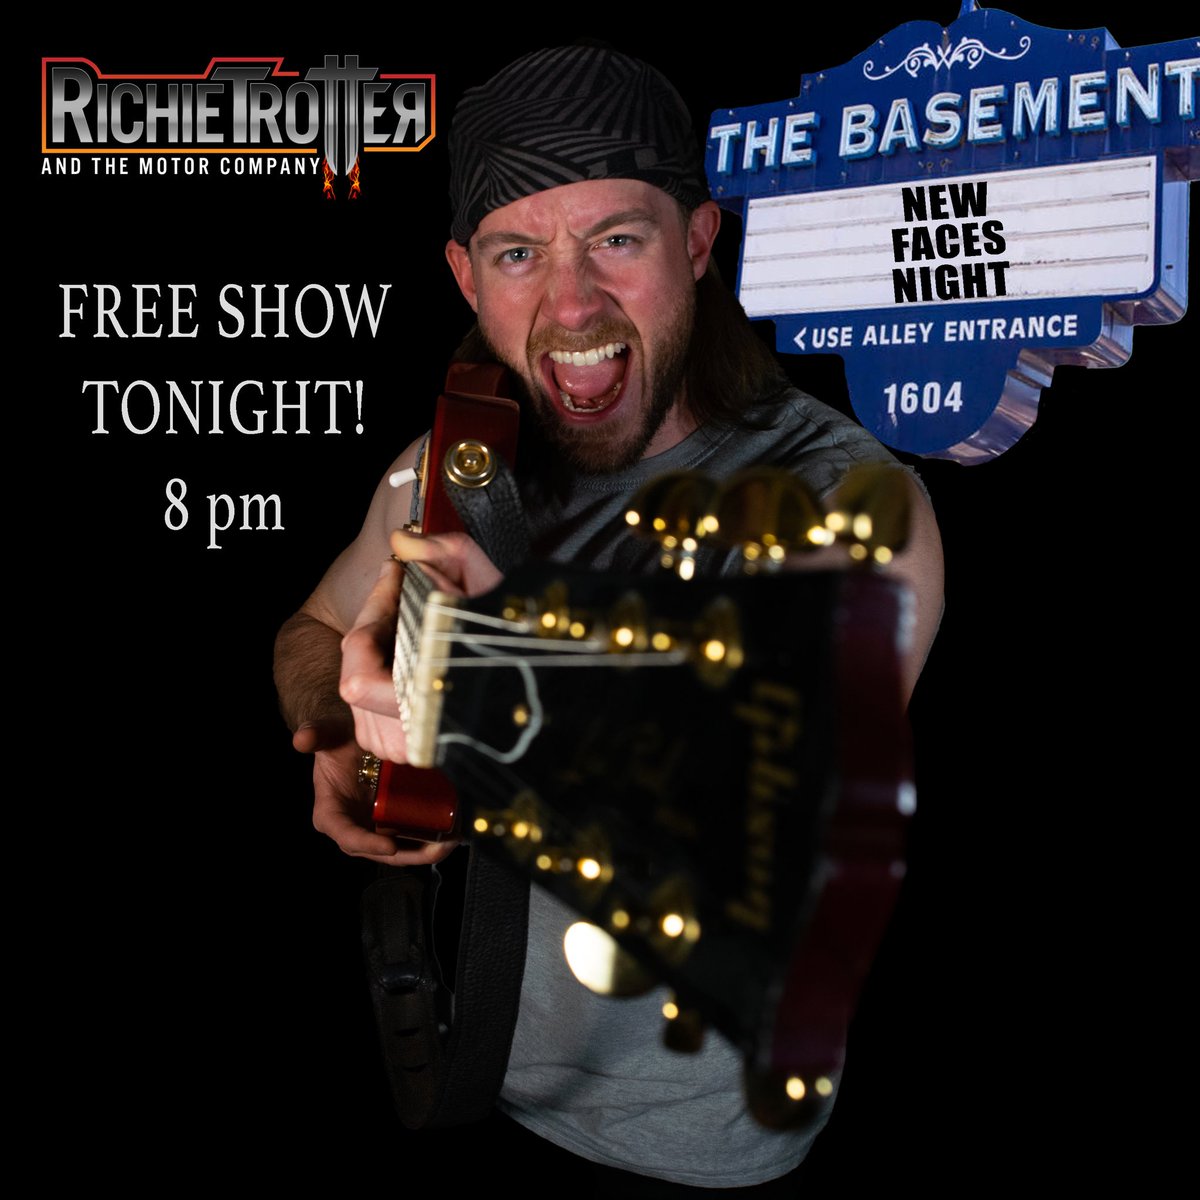 TONIGHT TONIGHT TONIGHT! We’re playing #NewFacesNight @TheBasement!! The FREE show starts at 8 pm! See y’all there! 🤘😎🤘
.
.
.
#RichieTrotter #TheMotorCompany #DearWorld #RTMC #TheBasementNashville #FreeLiveMusic
#FullBandShow #RockBand #RockMusic #NewMusic #Debut